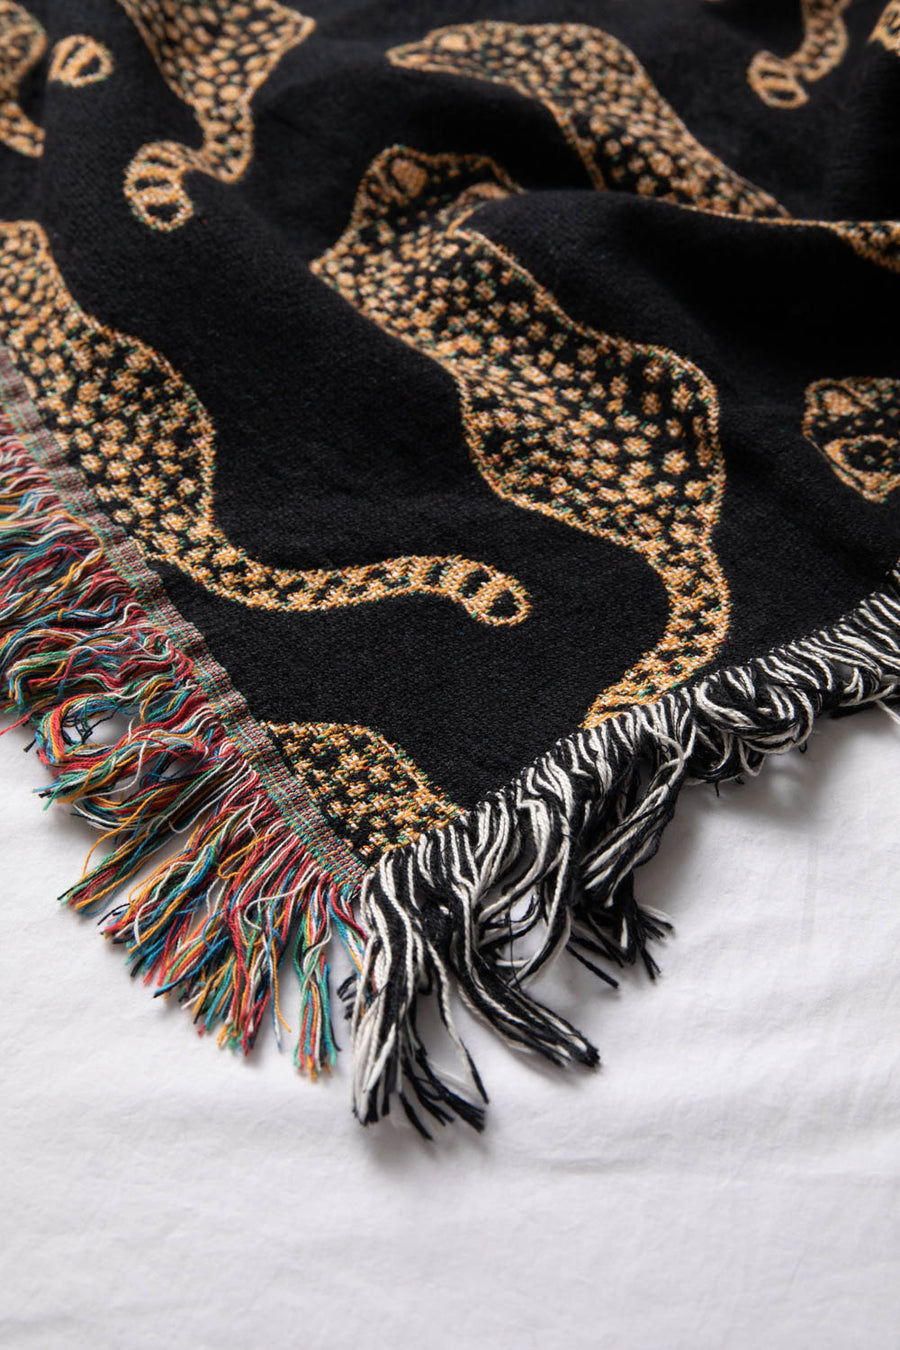 Leopard Black Throw Blanket Close Up